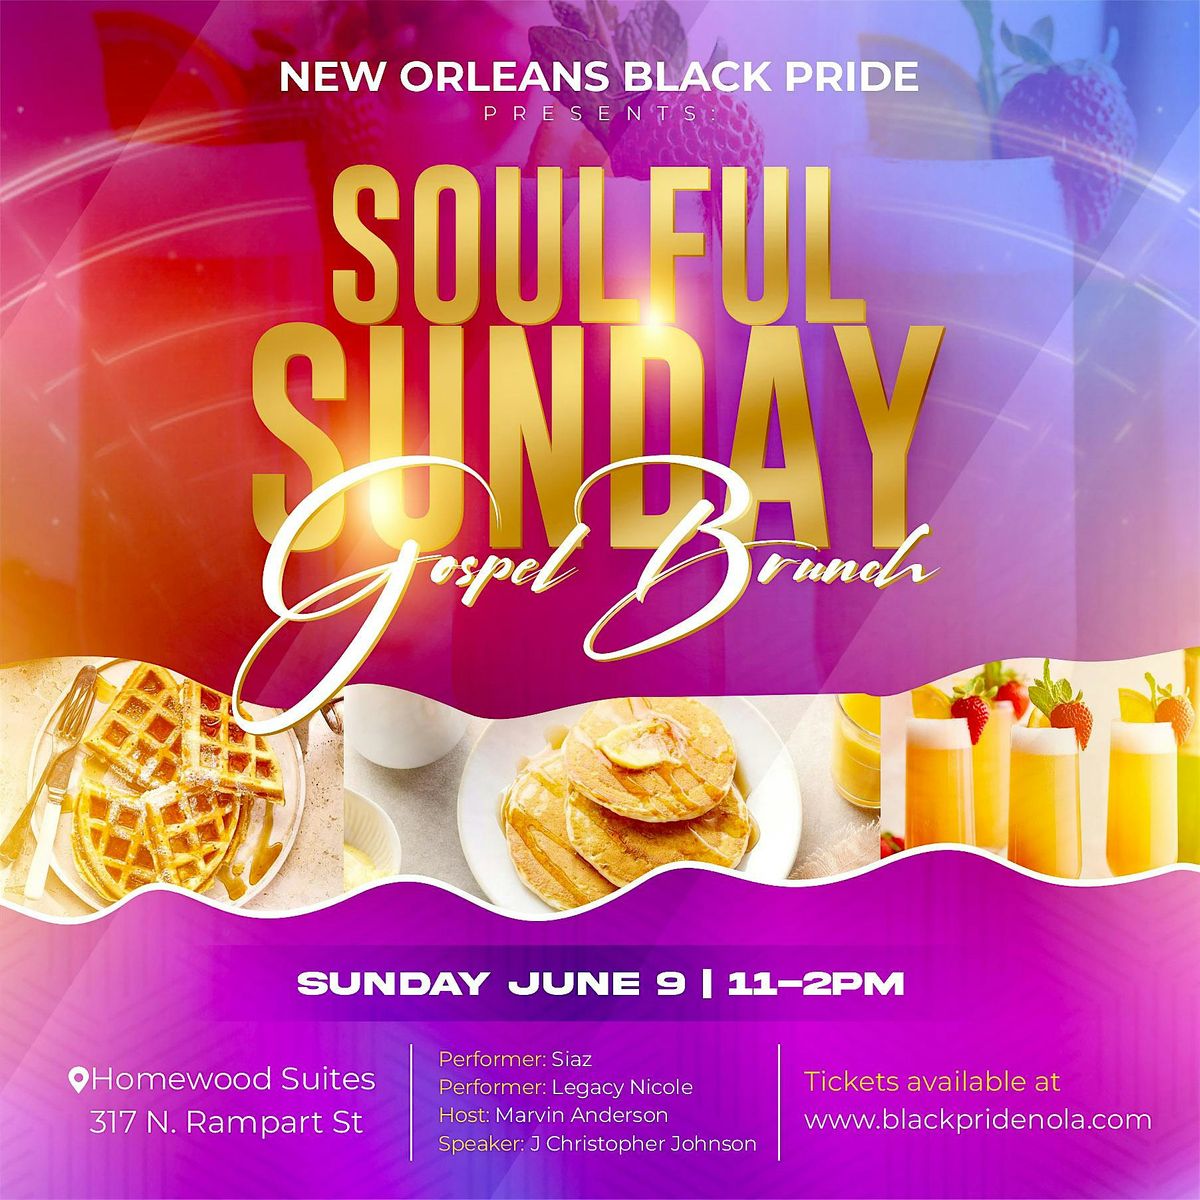 Soulful Sunday Gospel Brunch